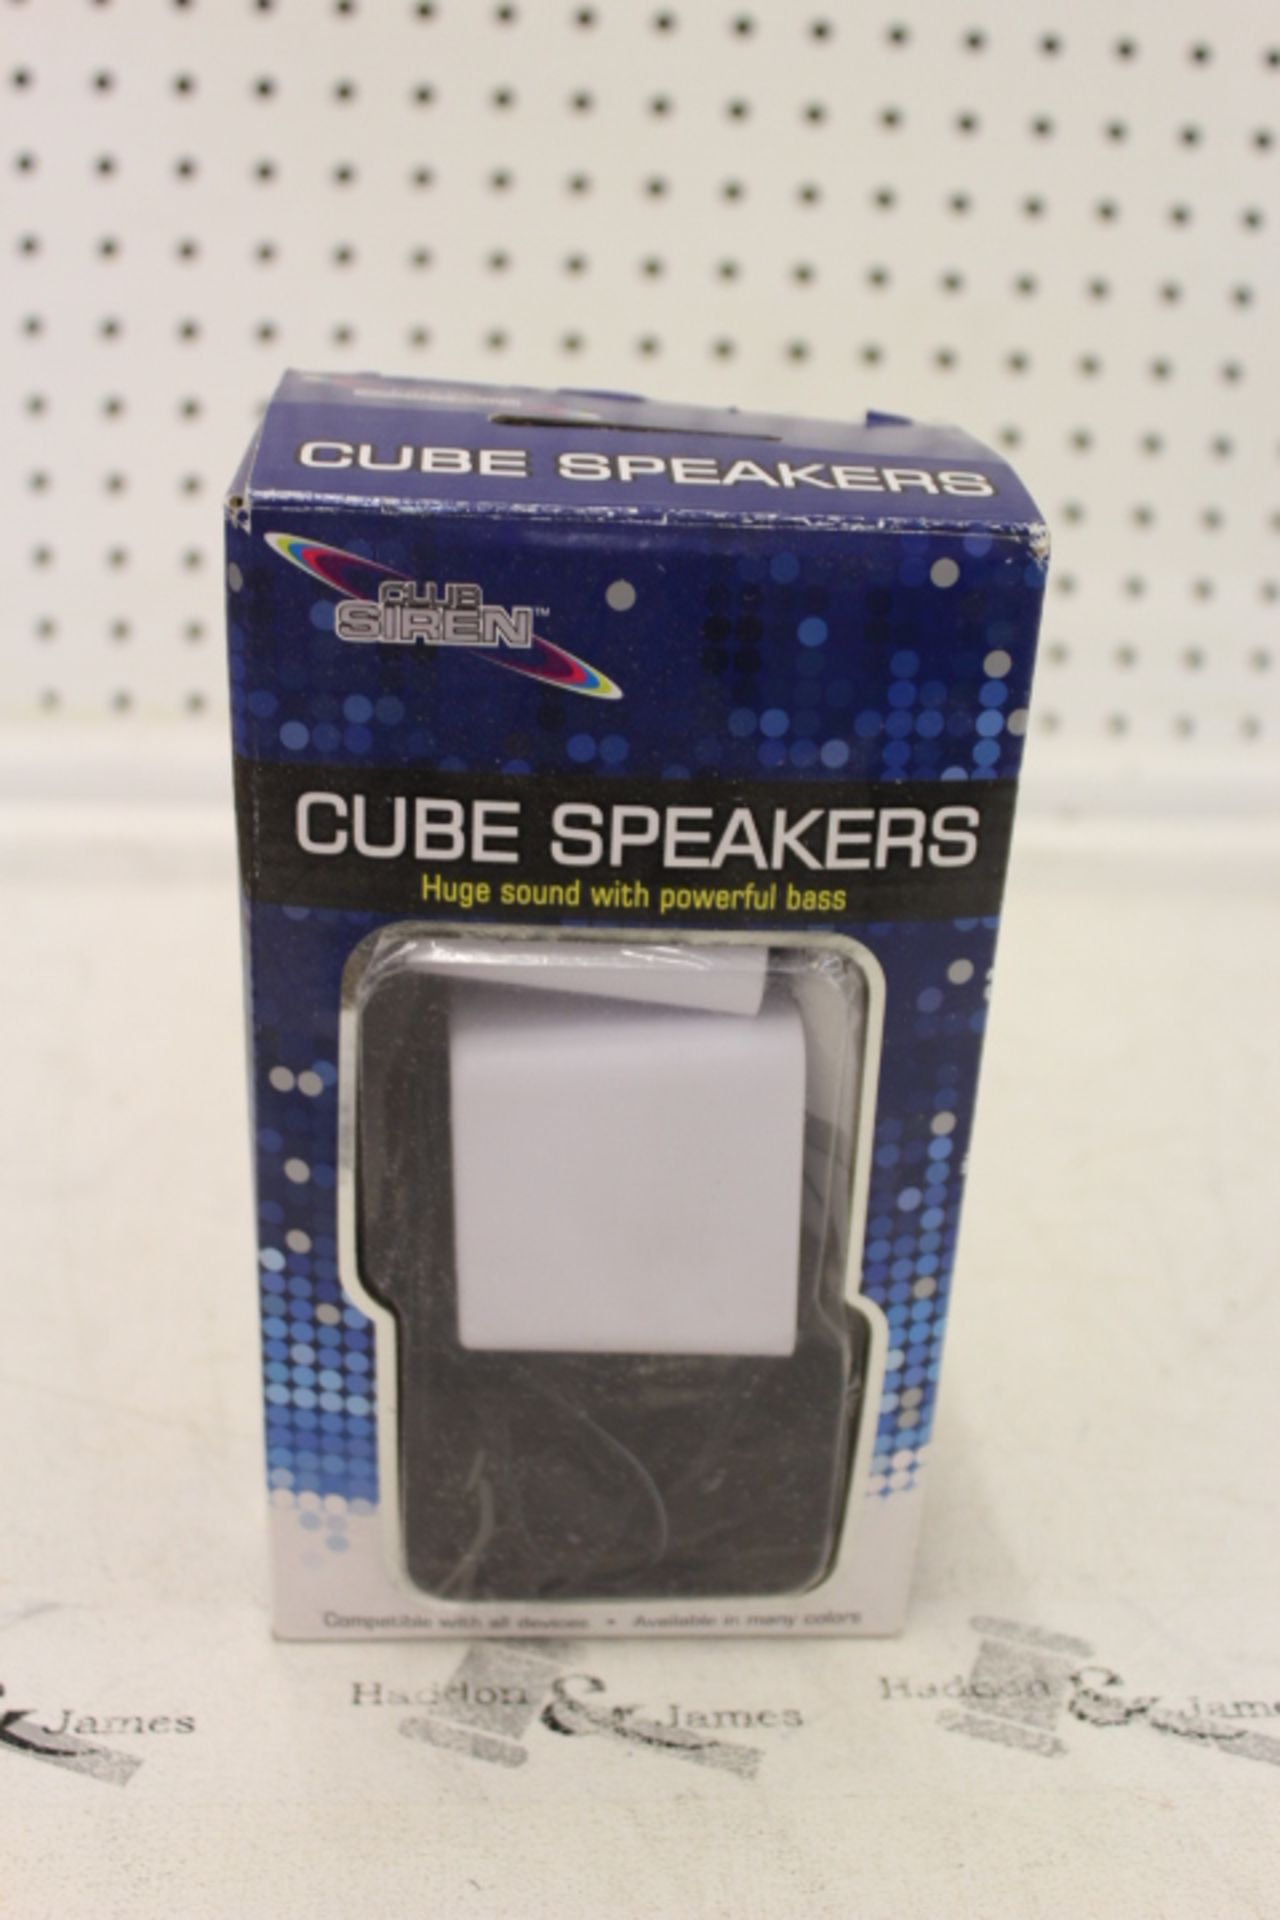 Grade U Club Siren Cube Speaker